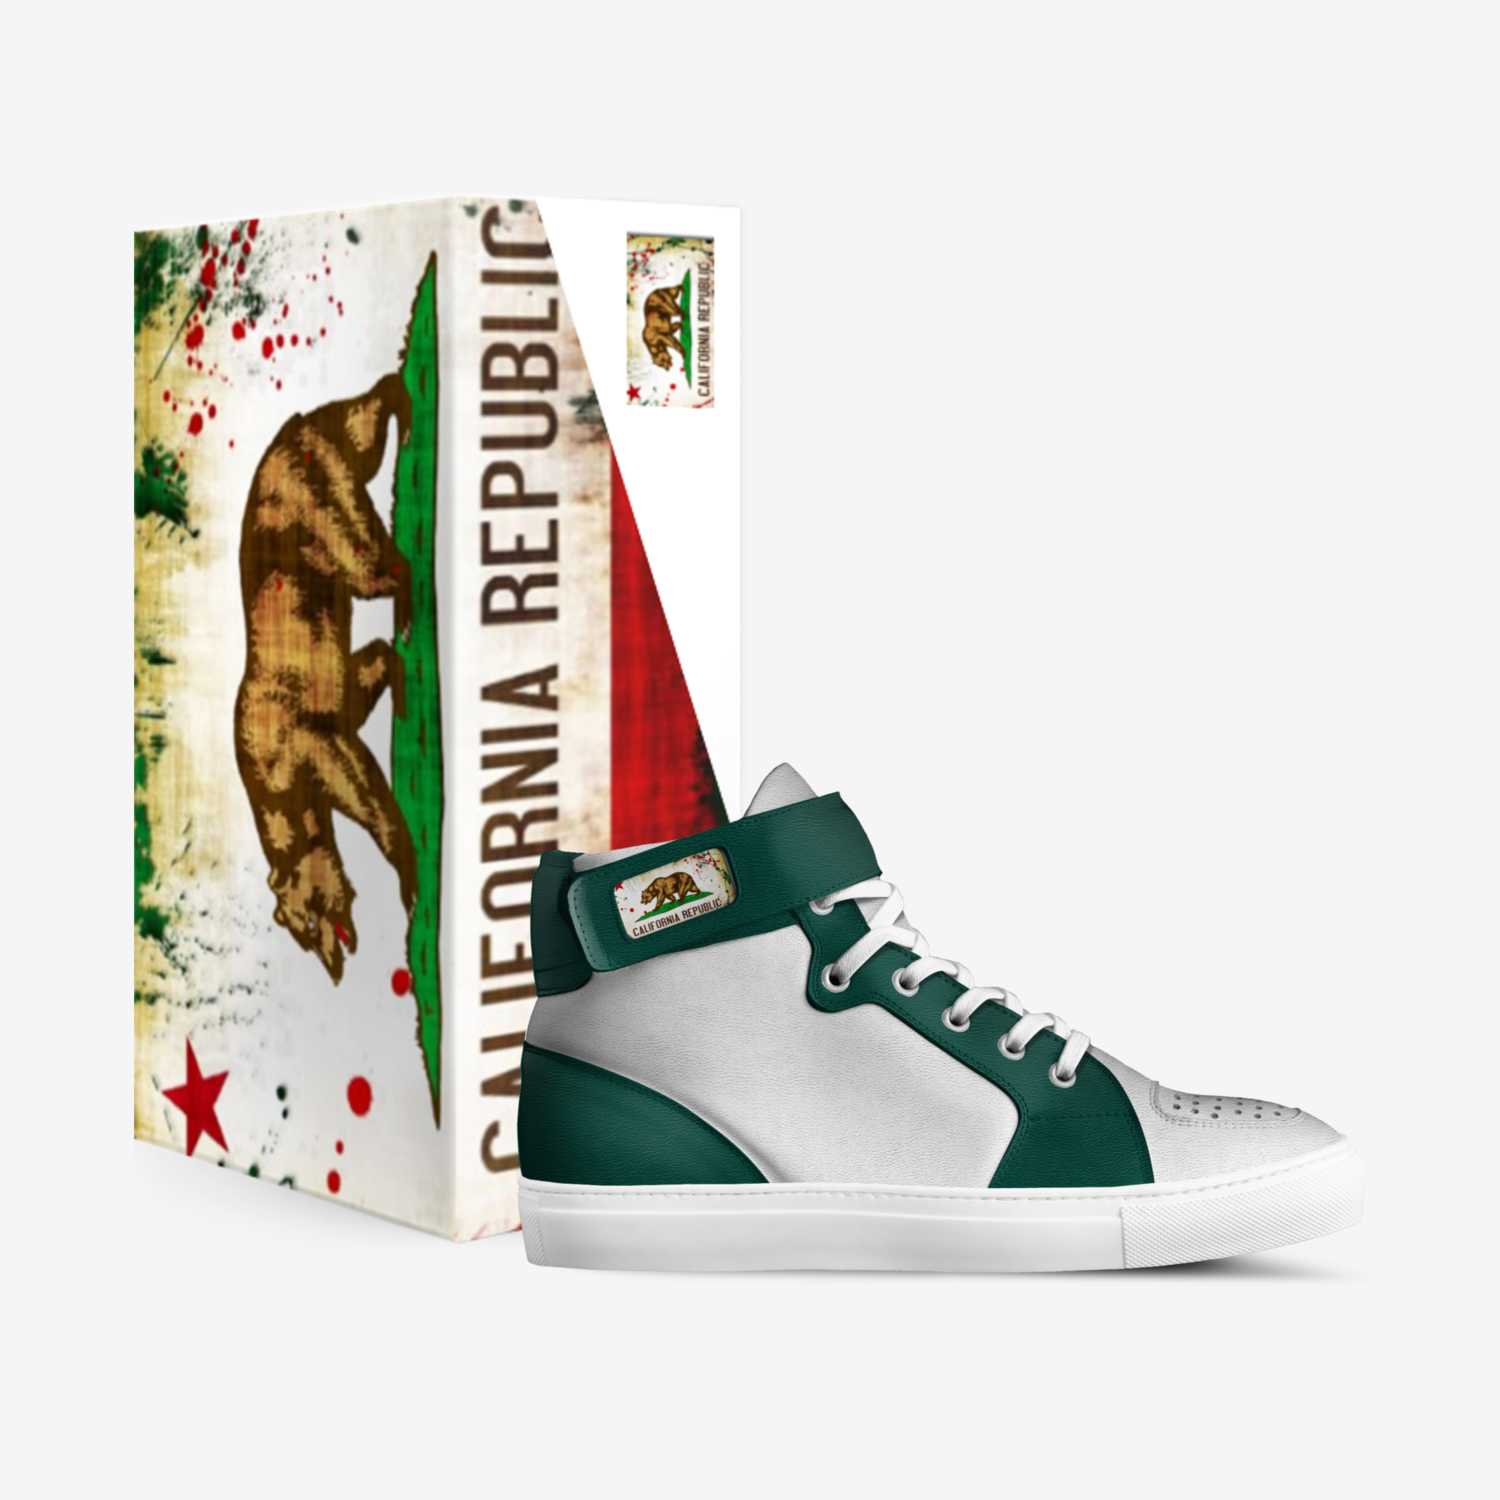 CALIFORNIA "MINT" custom made in Italy shoes by Tunisia Al-salahuddin | Box view